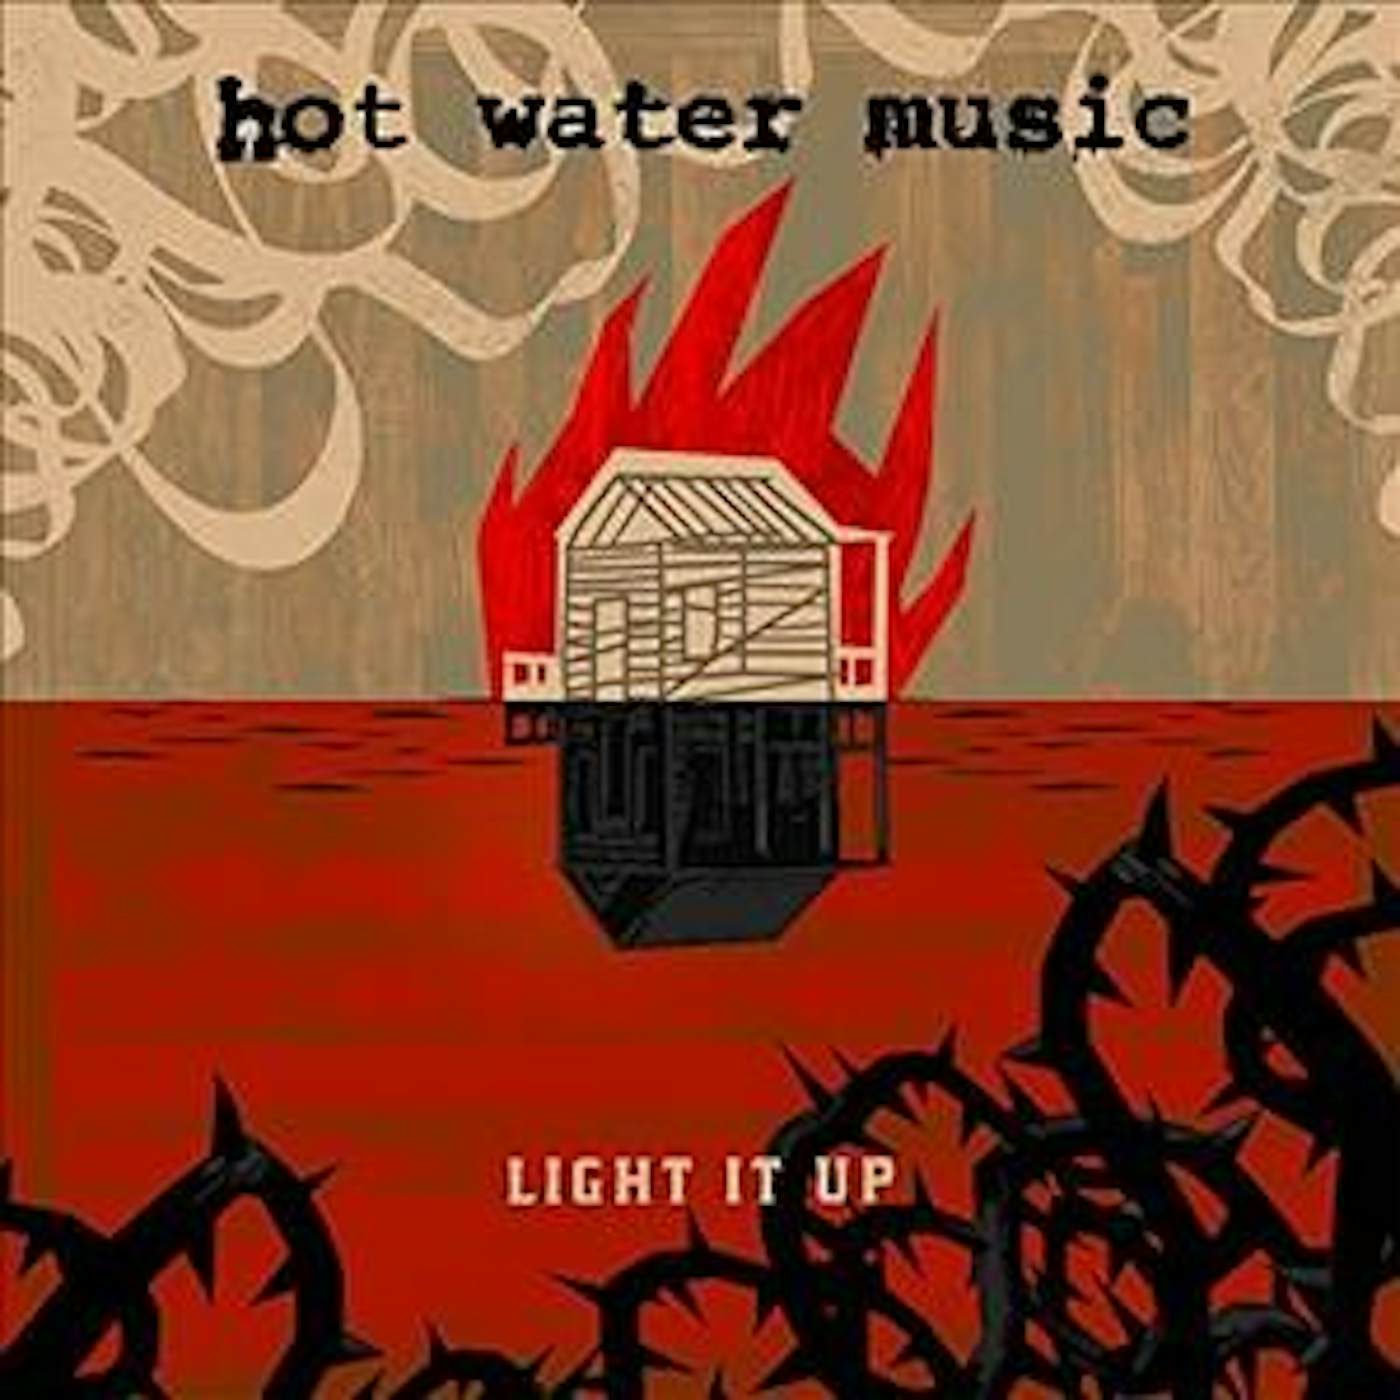 Hot Water Music Light It Up Vinyl Record